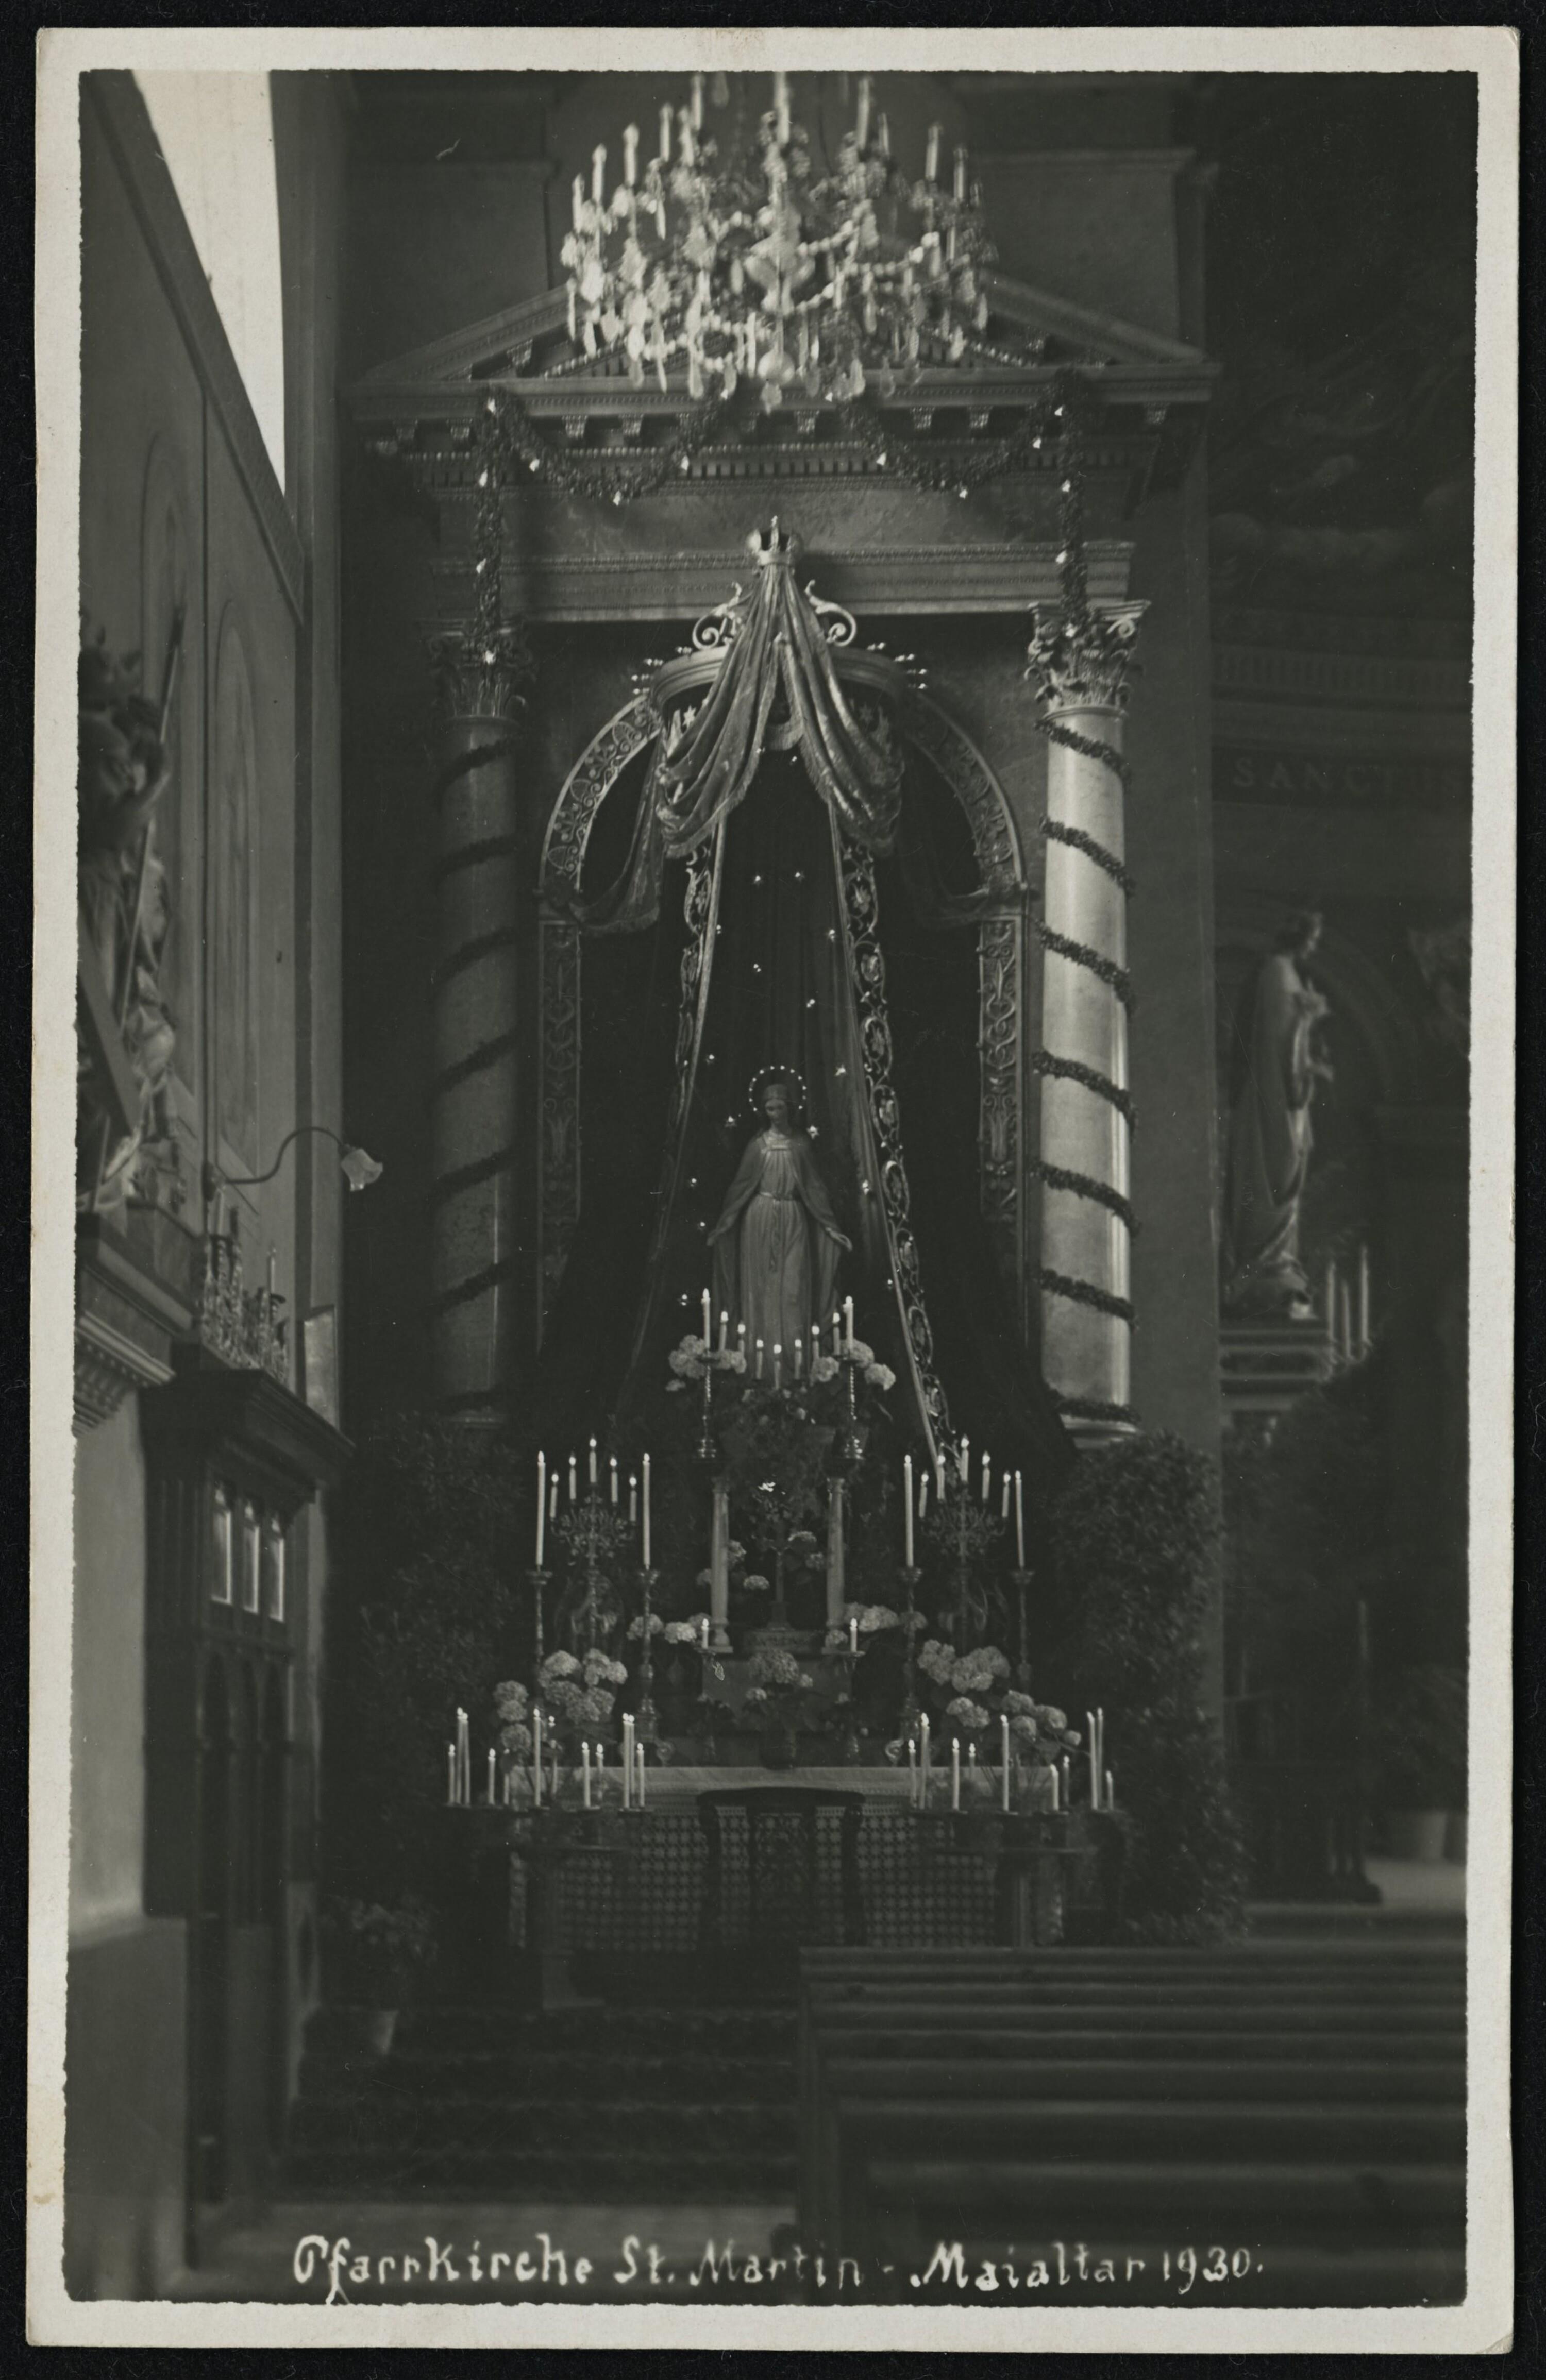 [Dornbirn] Pfarrkirche St. Martin - Maialtar 1930></div>


    <hr>
    <div class=